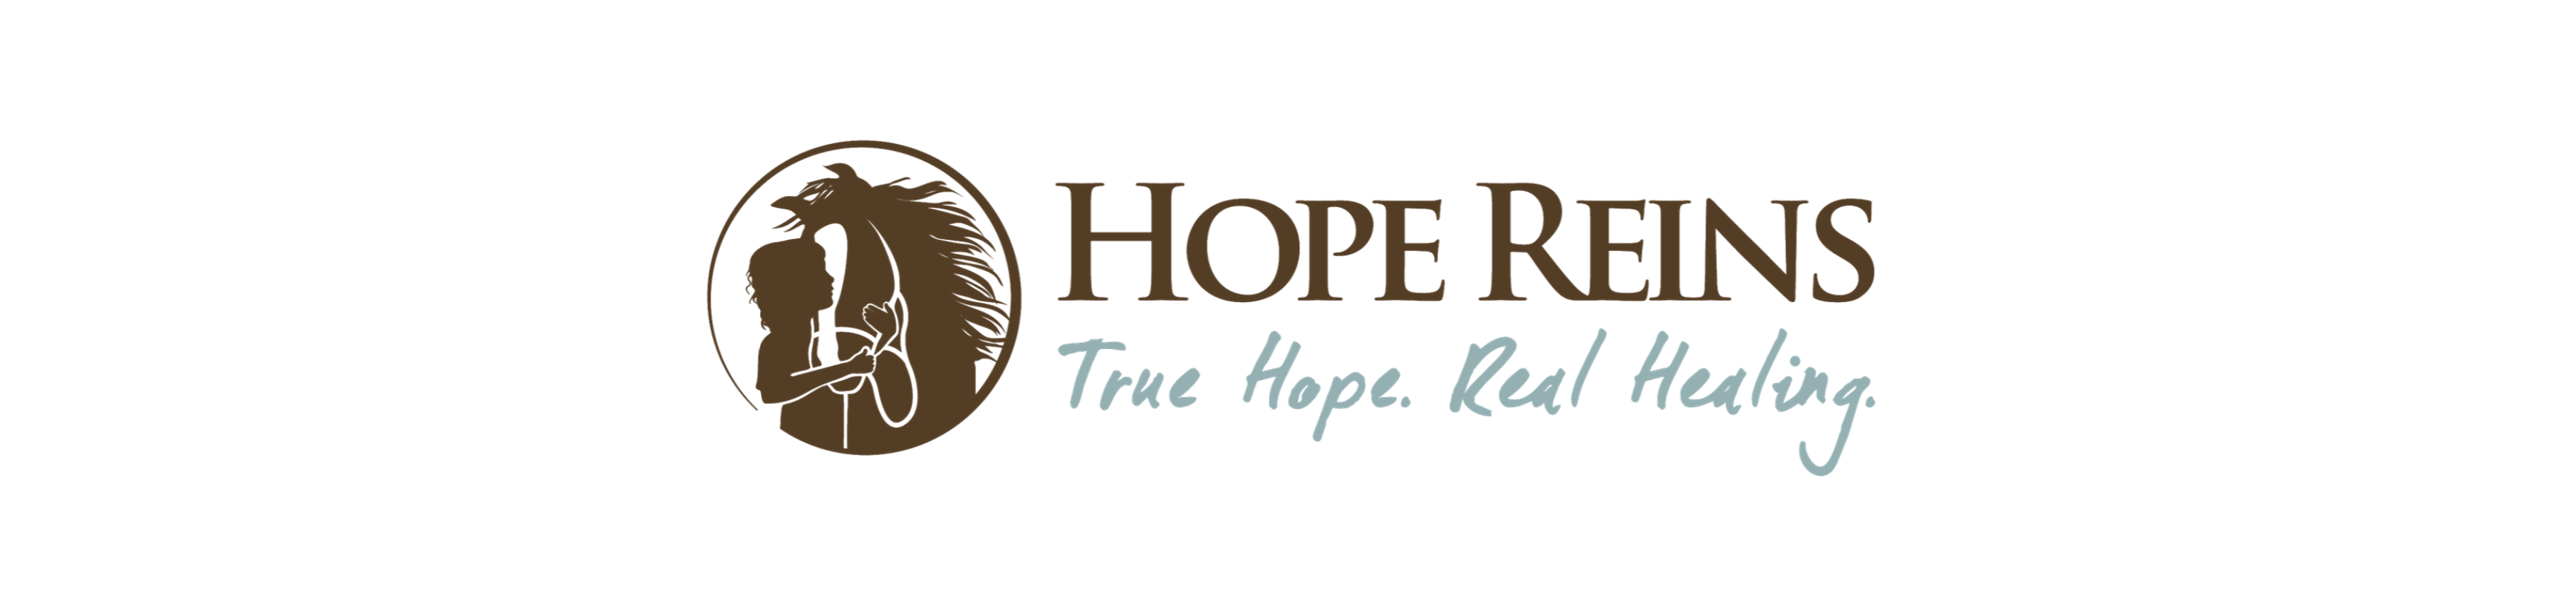 Hope Reins Barn Boutique